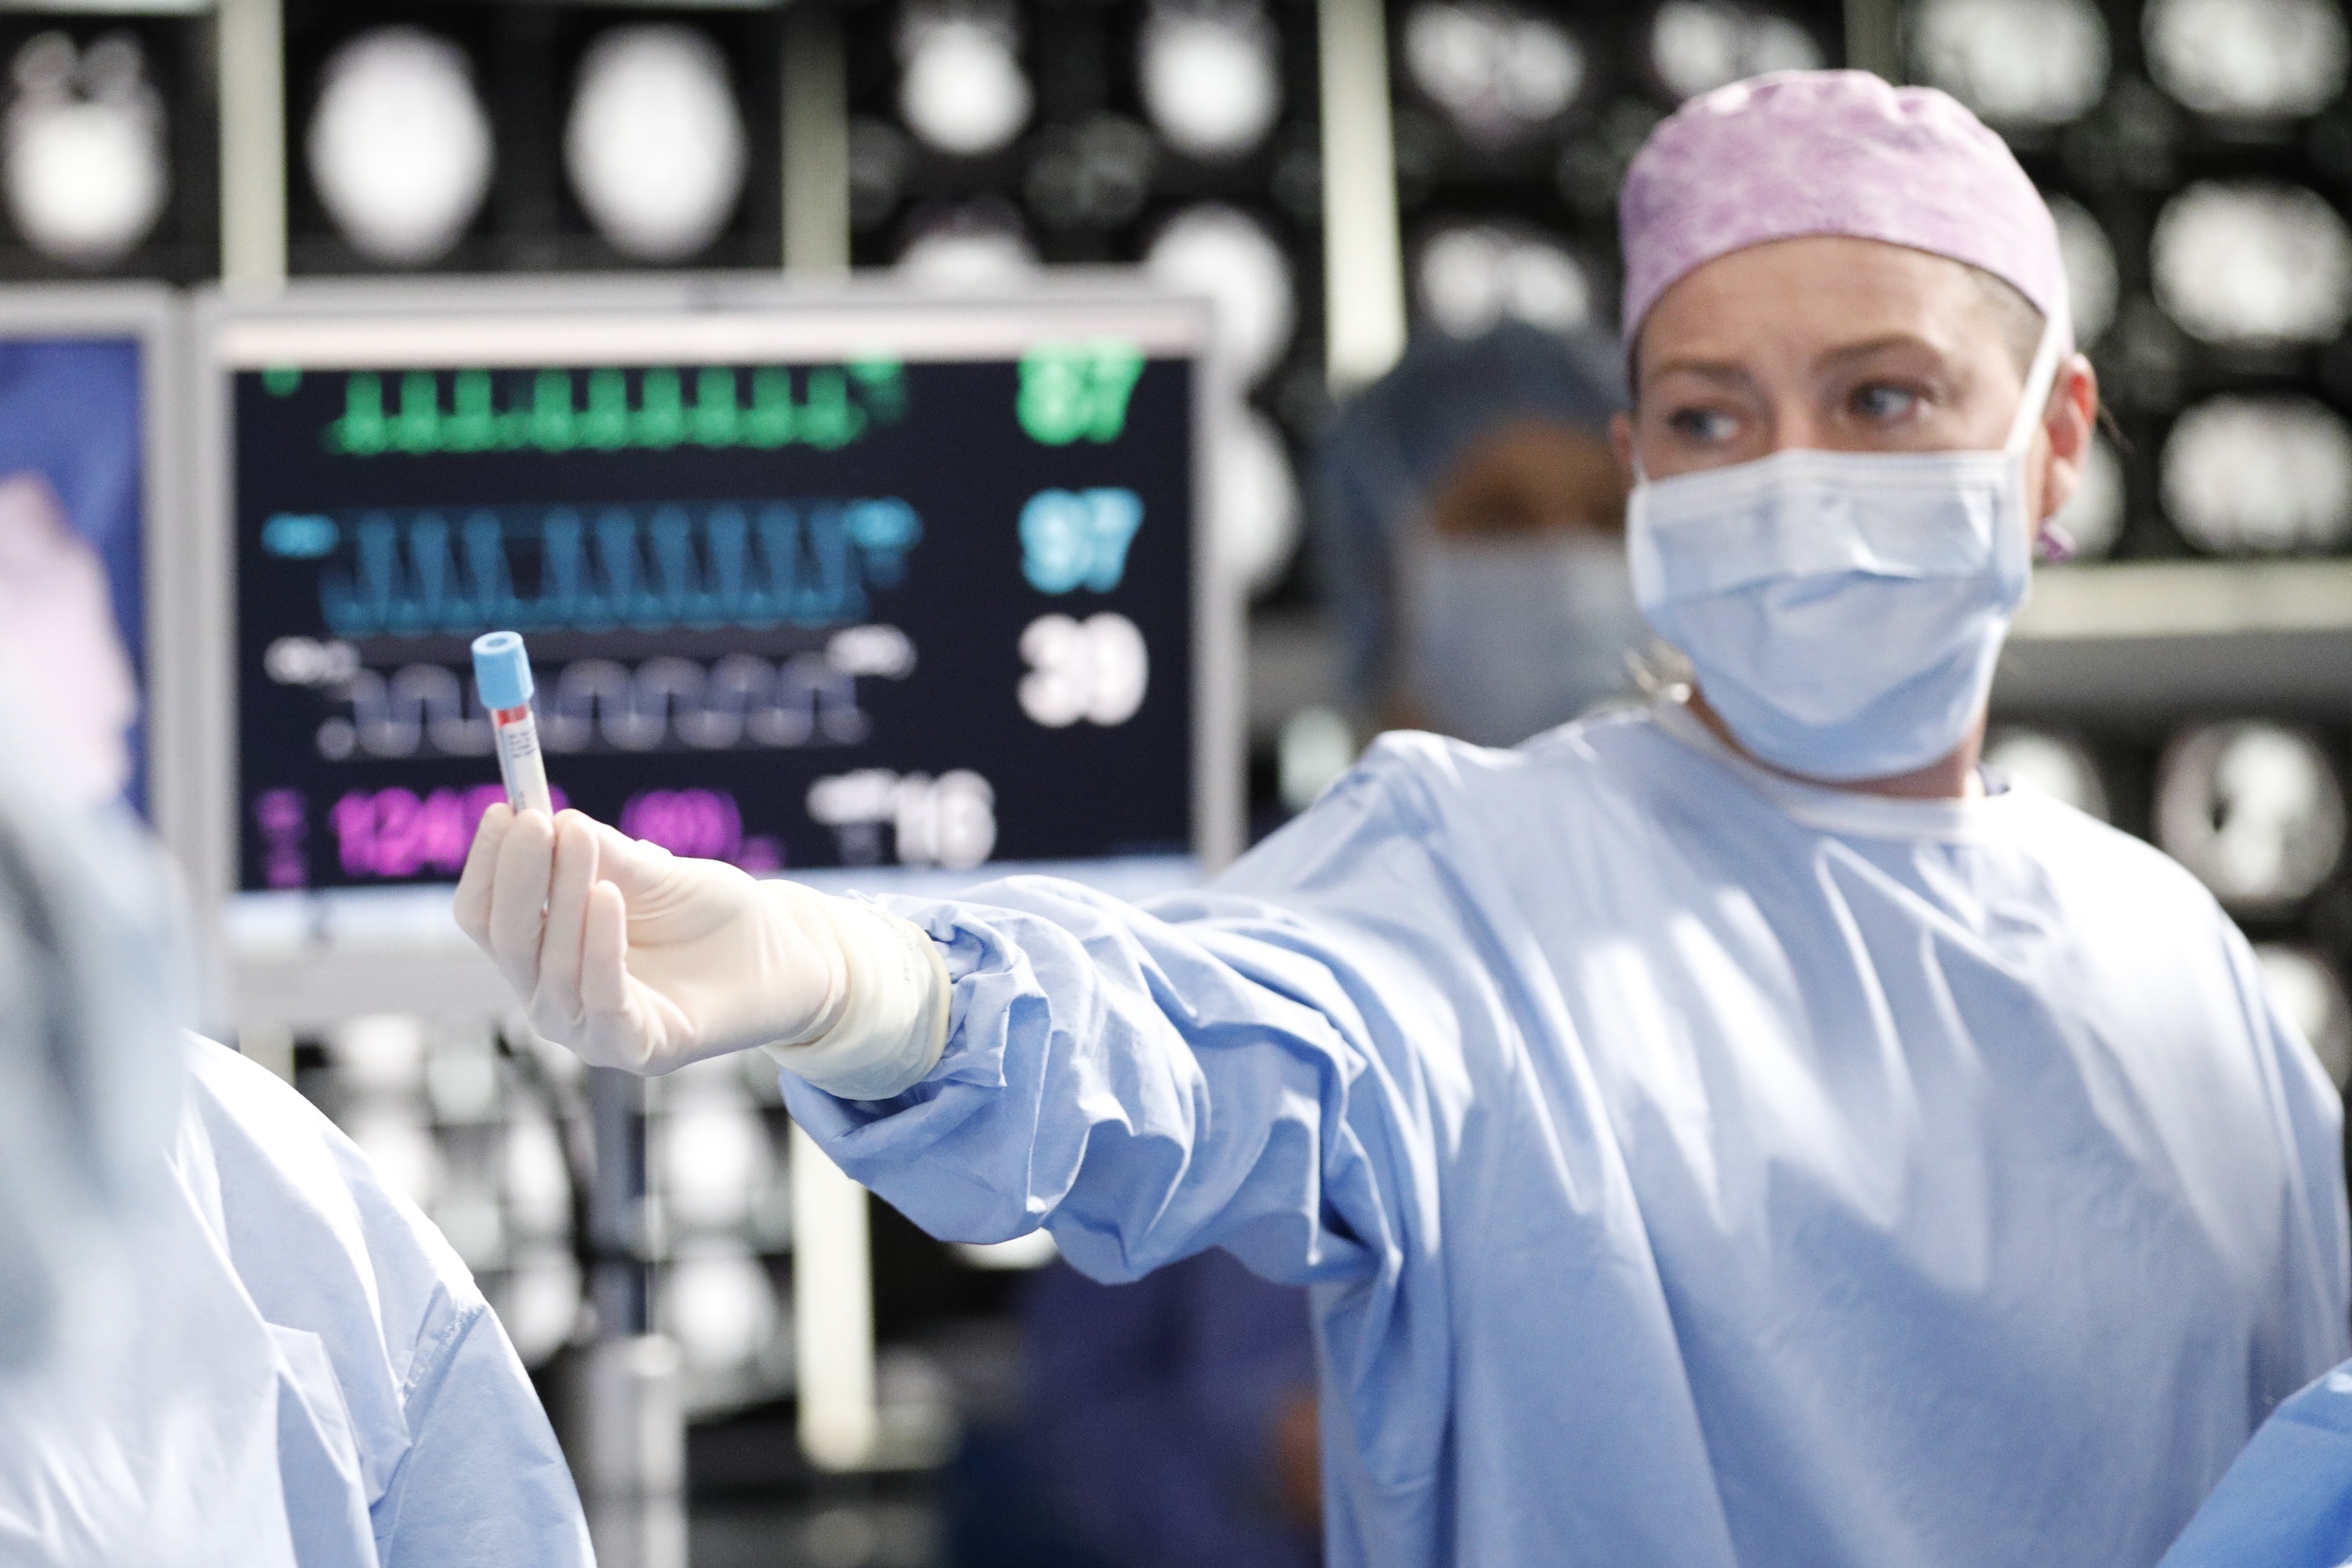 'Grey's Anatomy' star Ellen Pompeo